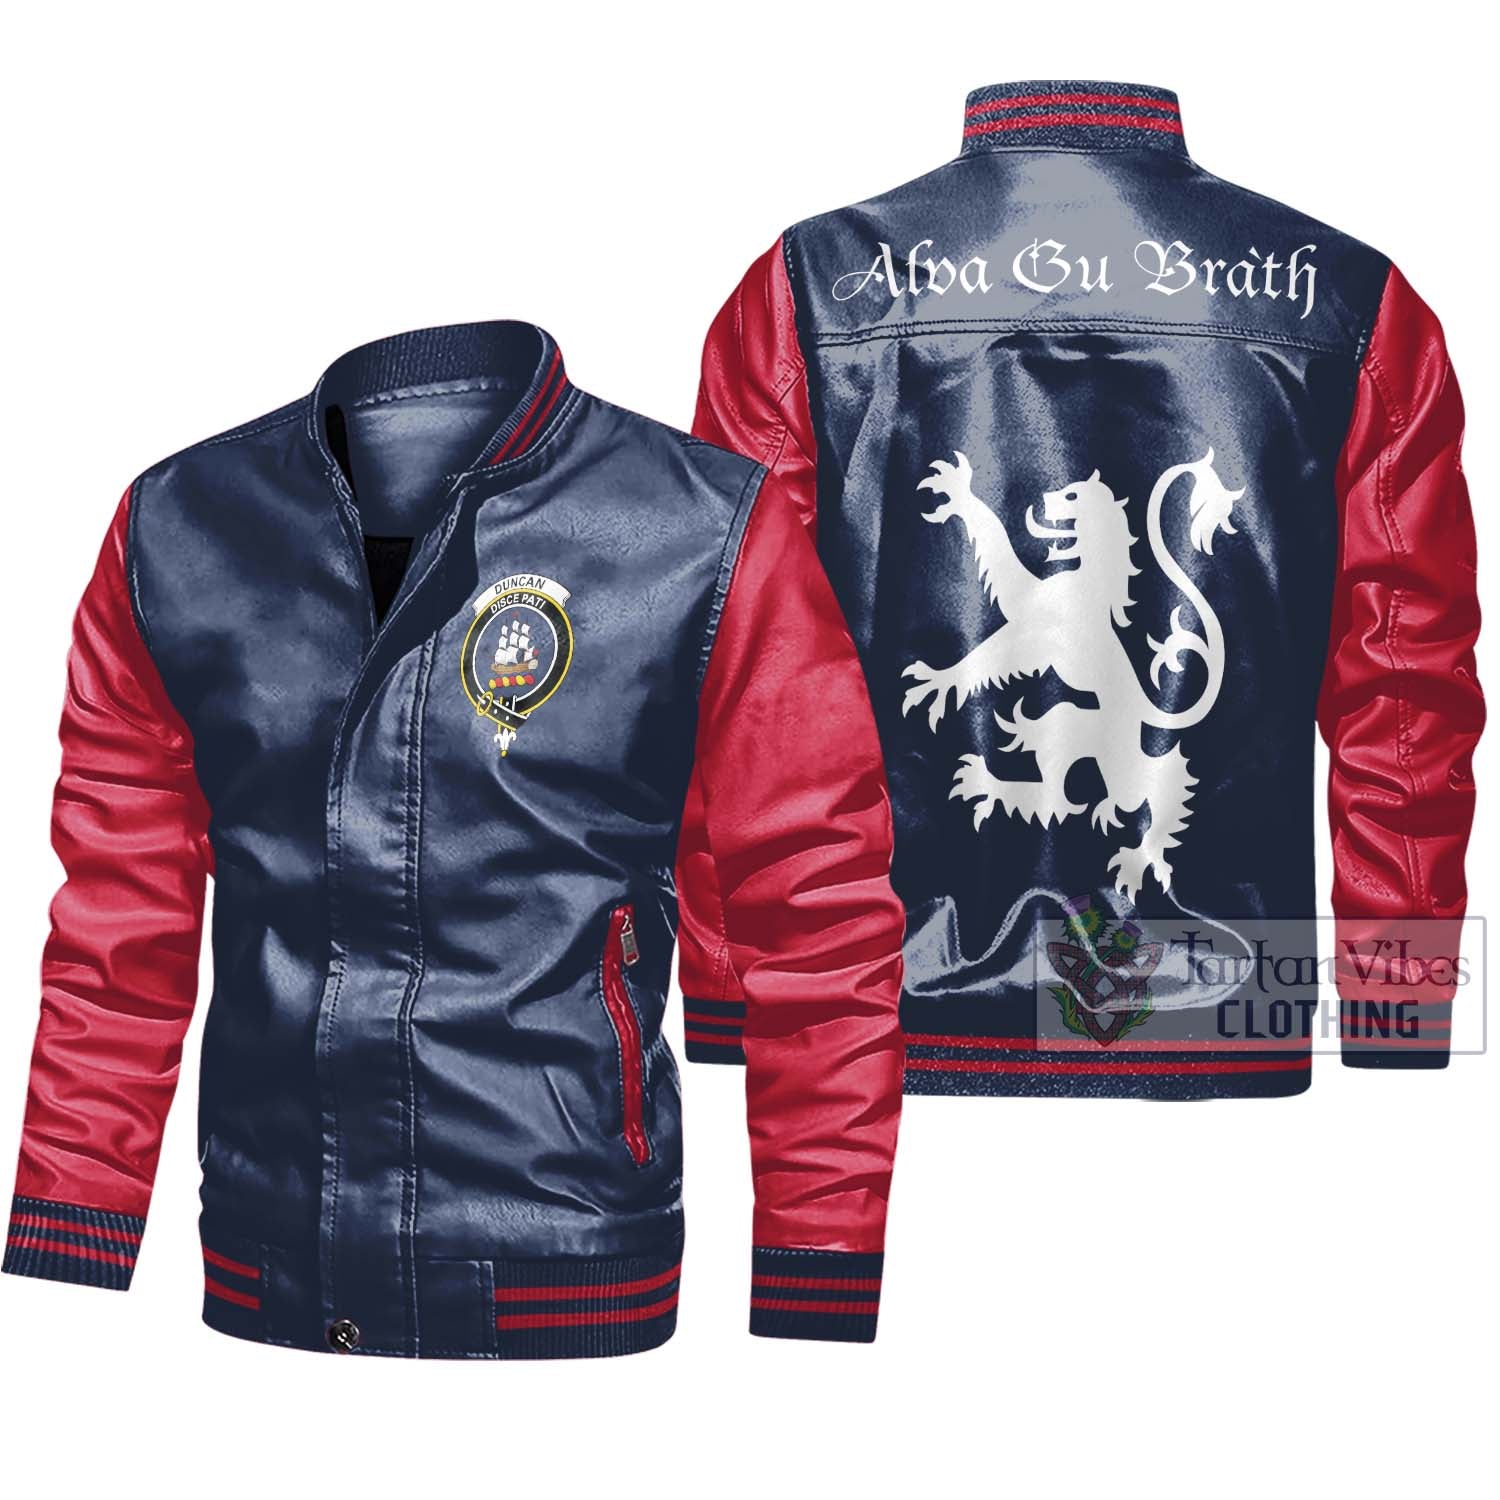 Tartan Vibes Clothing Duncan Family Crest Leather Bomber Jacket Lion Rampant Alba Gu Brath Style